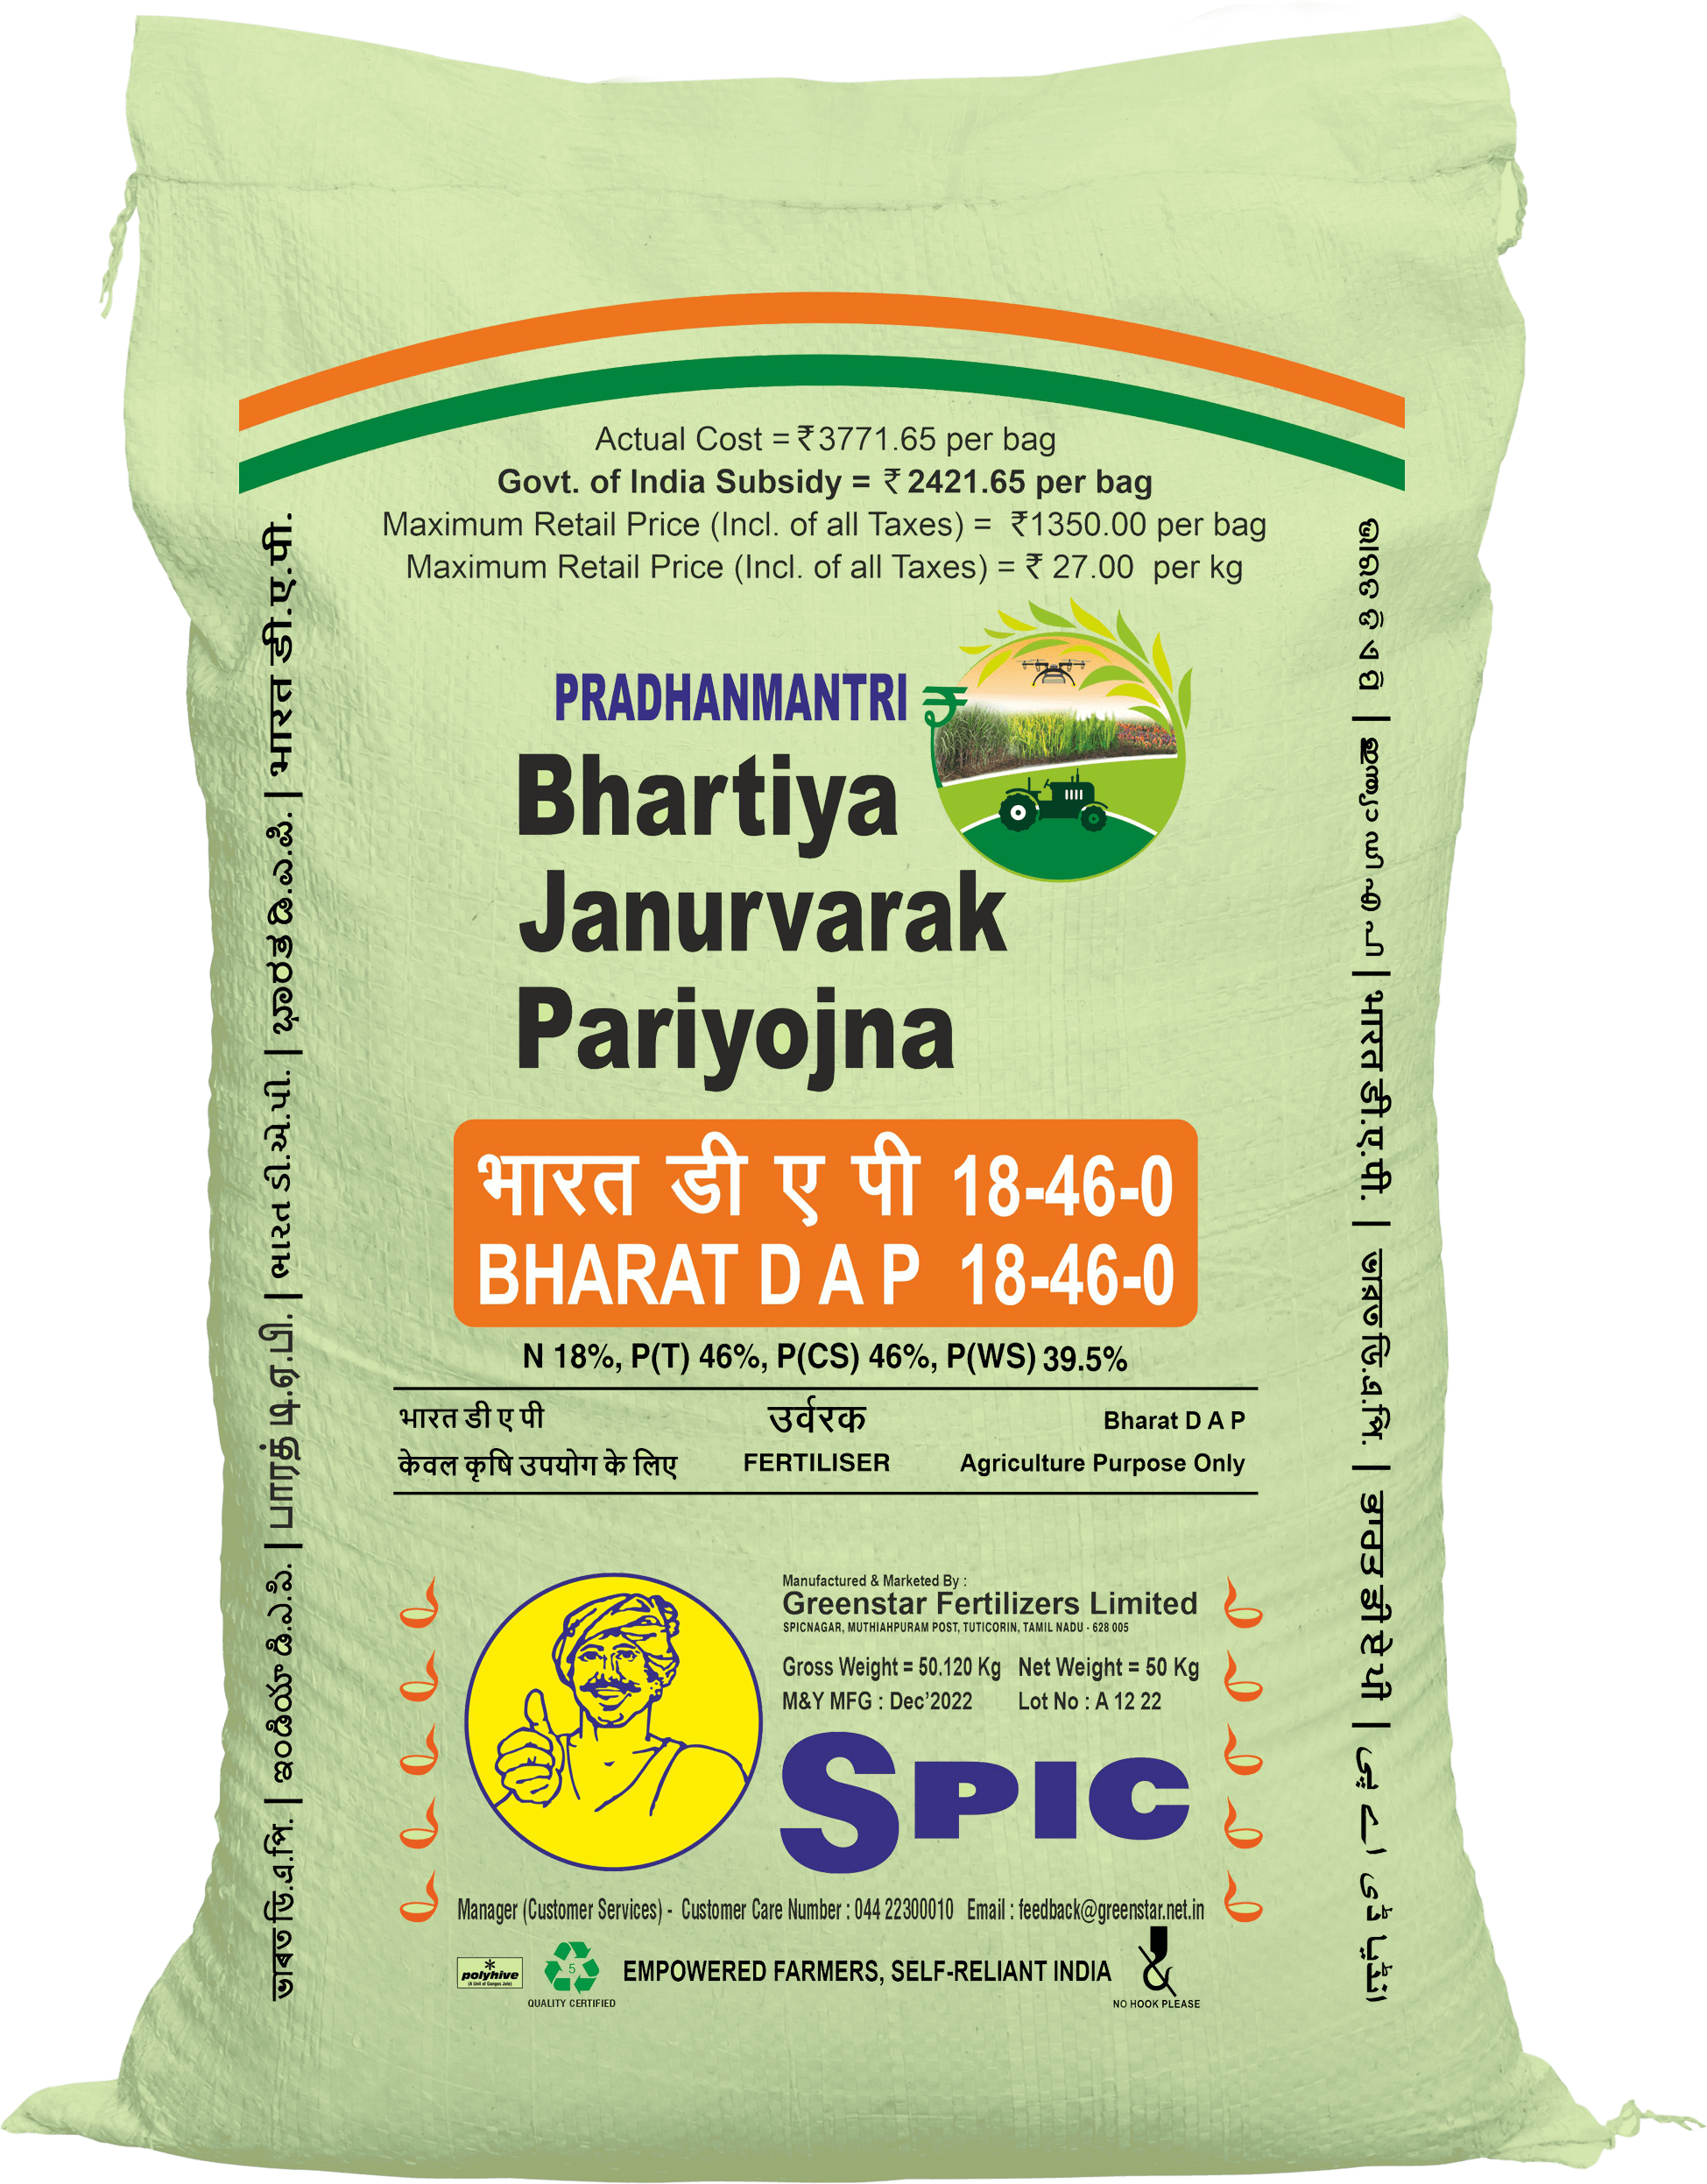 Bharat DAP (SPIC DAP) (Indigenous)